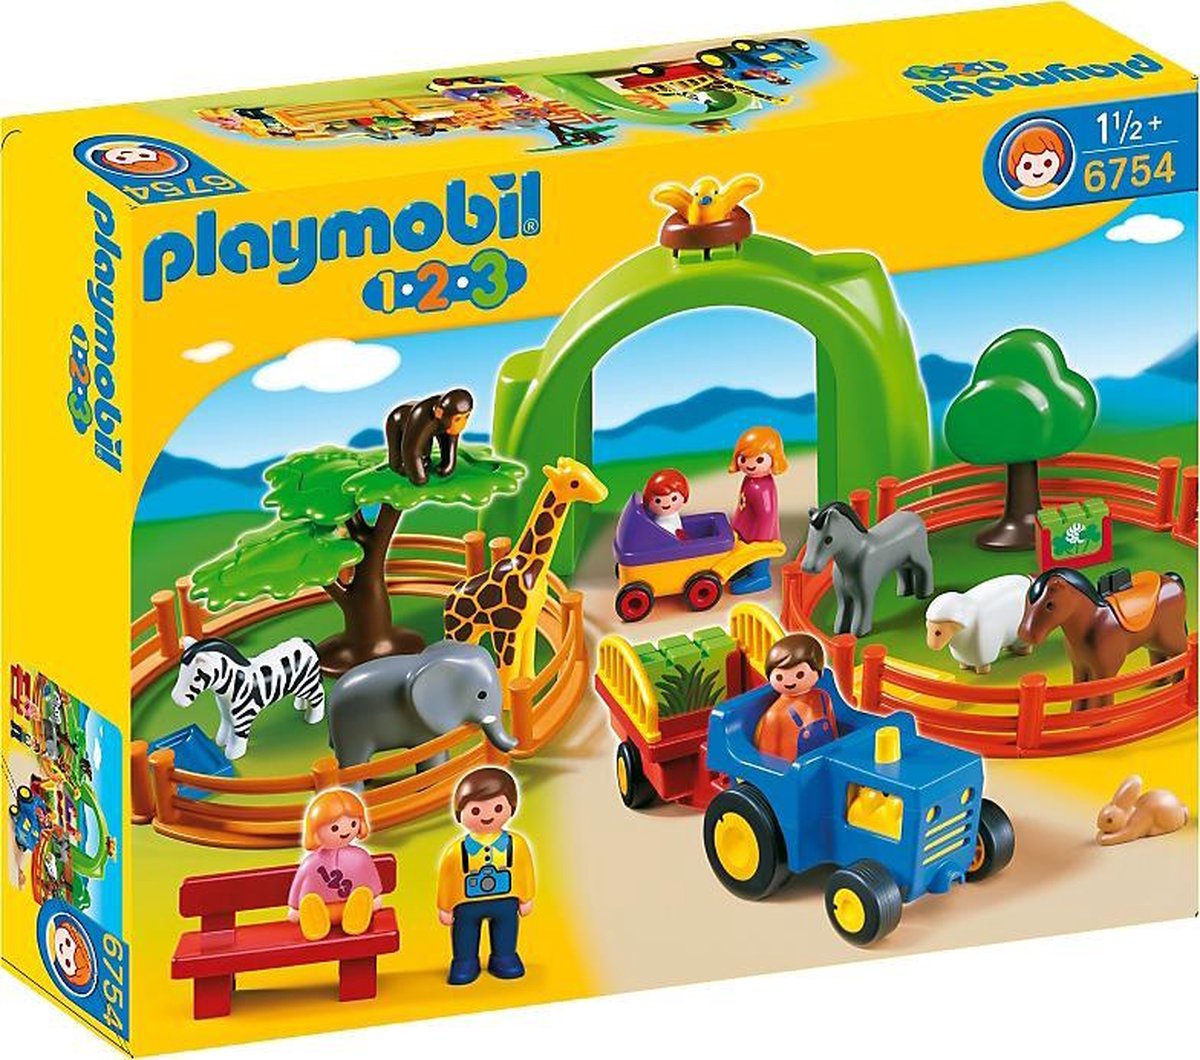 Playmobil 123 Grand Zoo - 6754